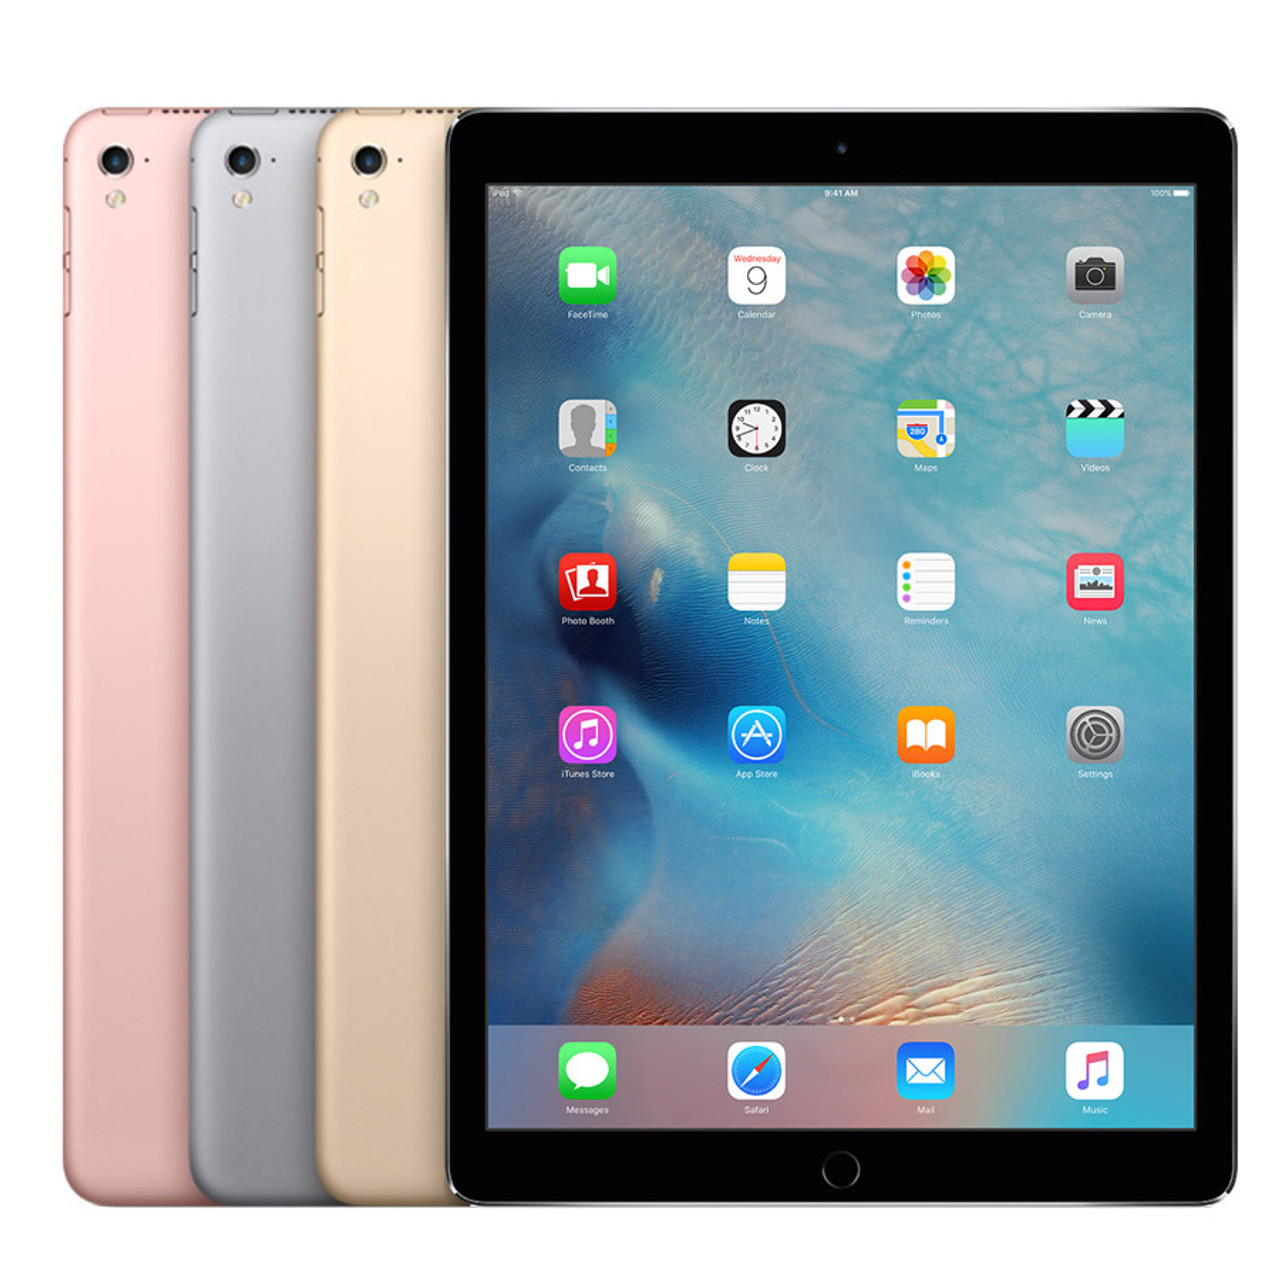 Apple iPad Pro 9.7-inch (128GB) Wi-Fi